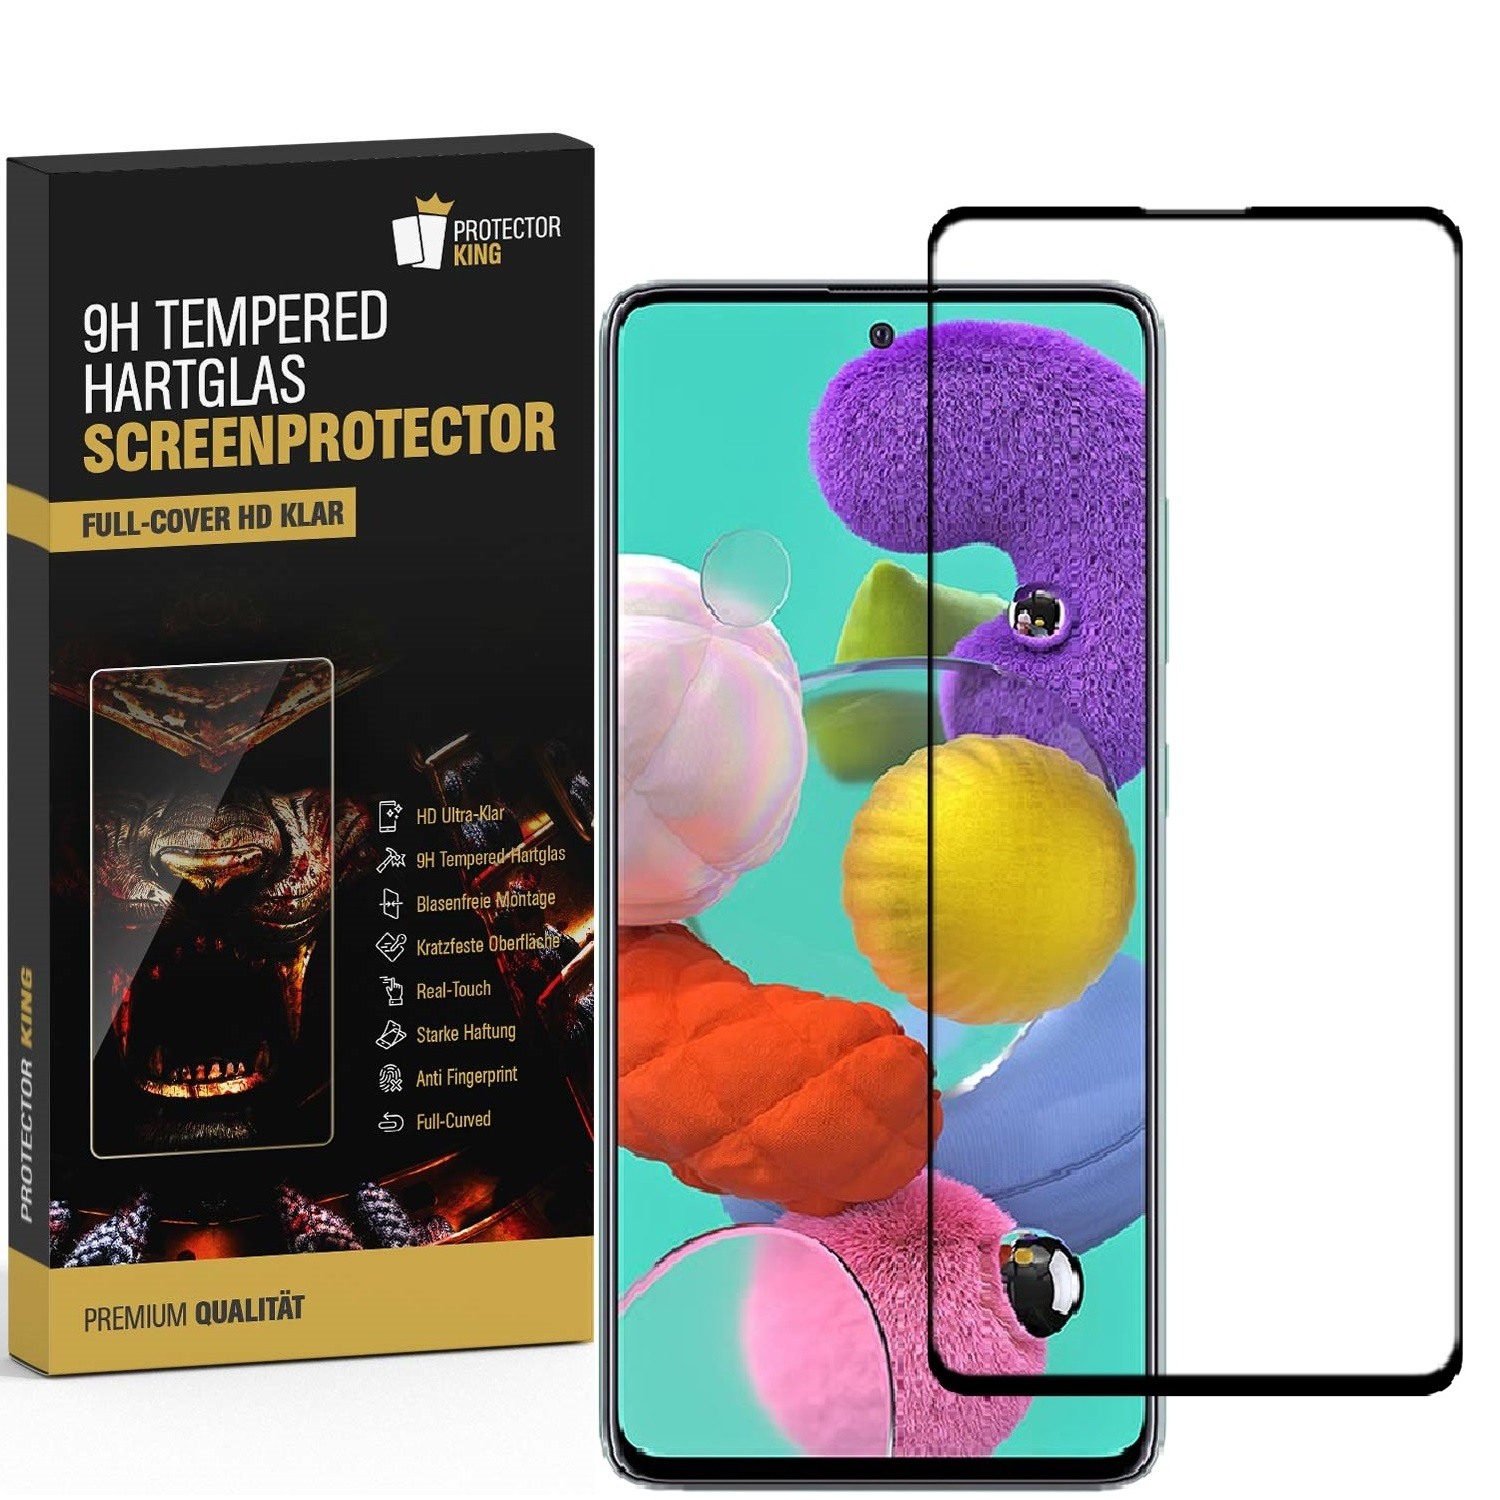 HD PROTECTORKING COVER 9H FULL Galaxy 4x A51) Hartglas KLAR Displayschutzfolie(für Samsung